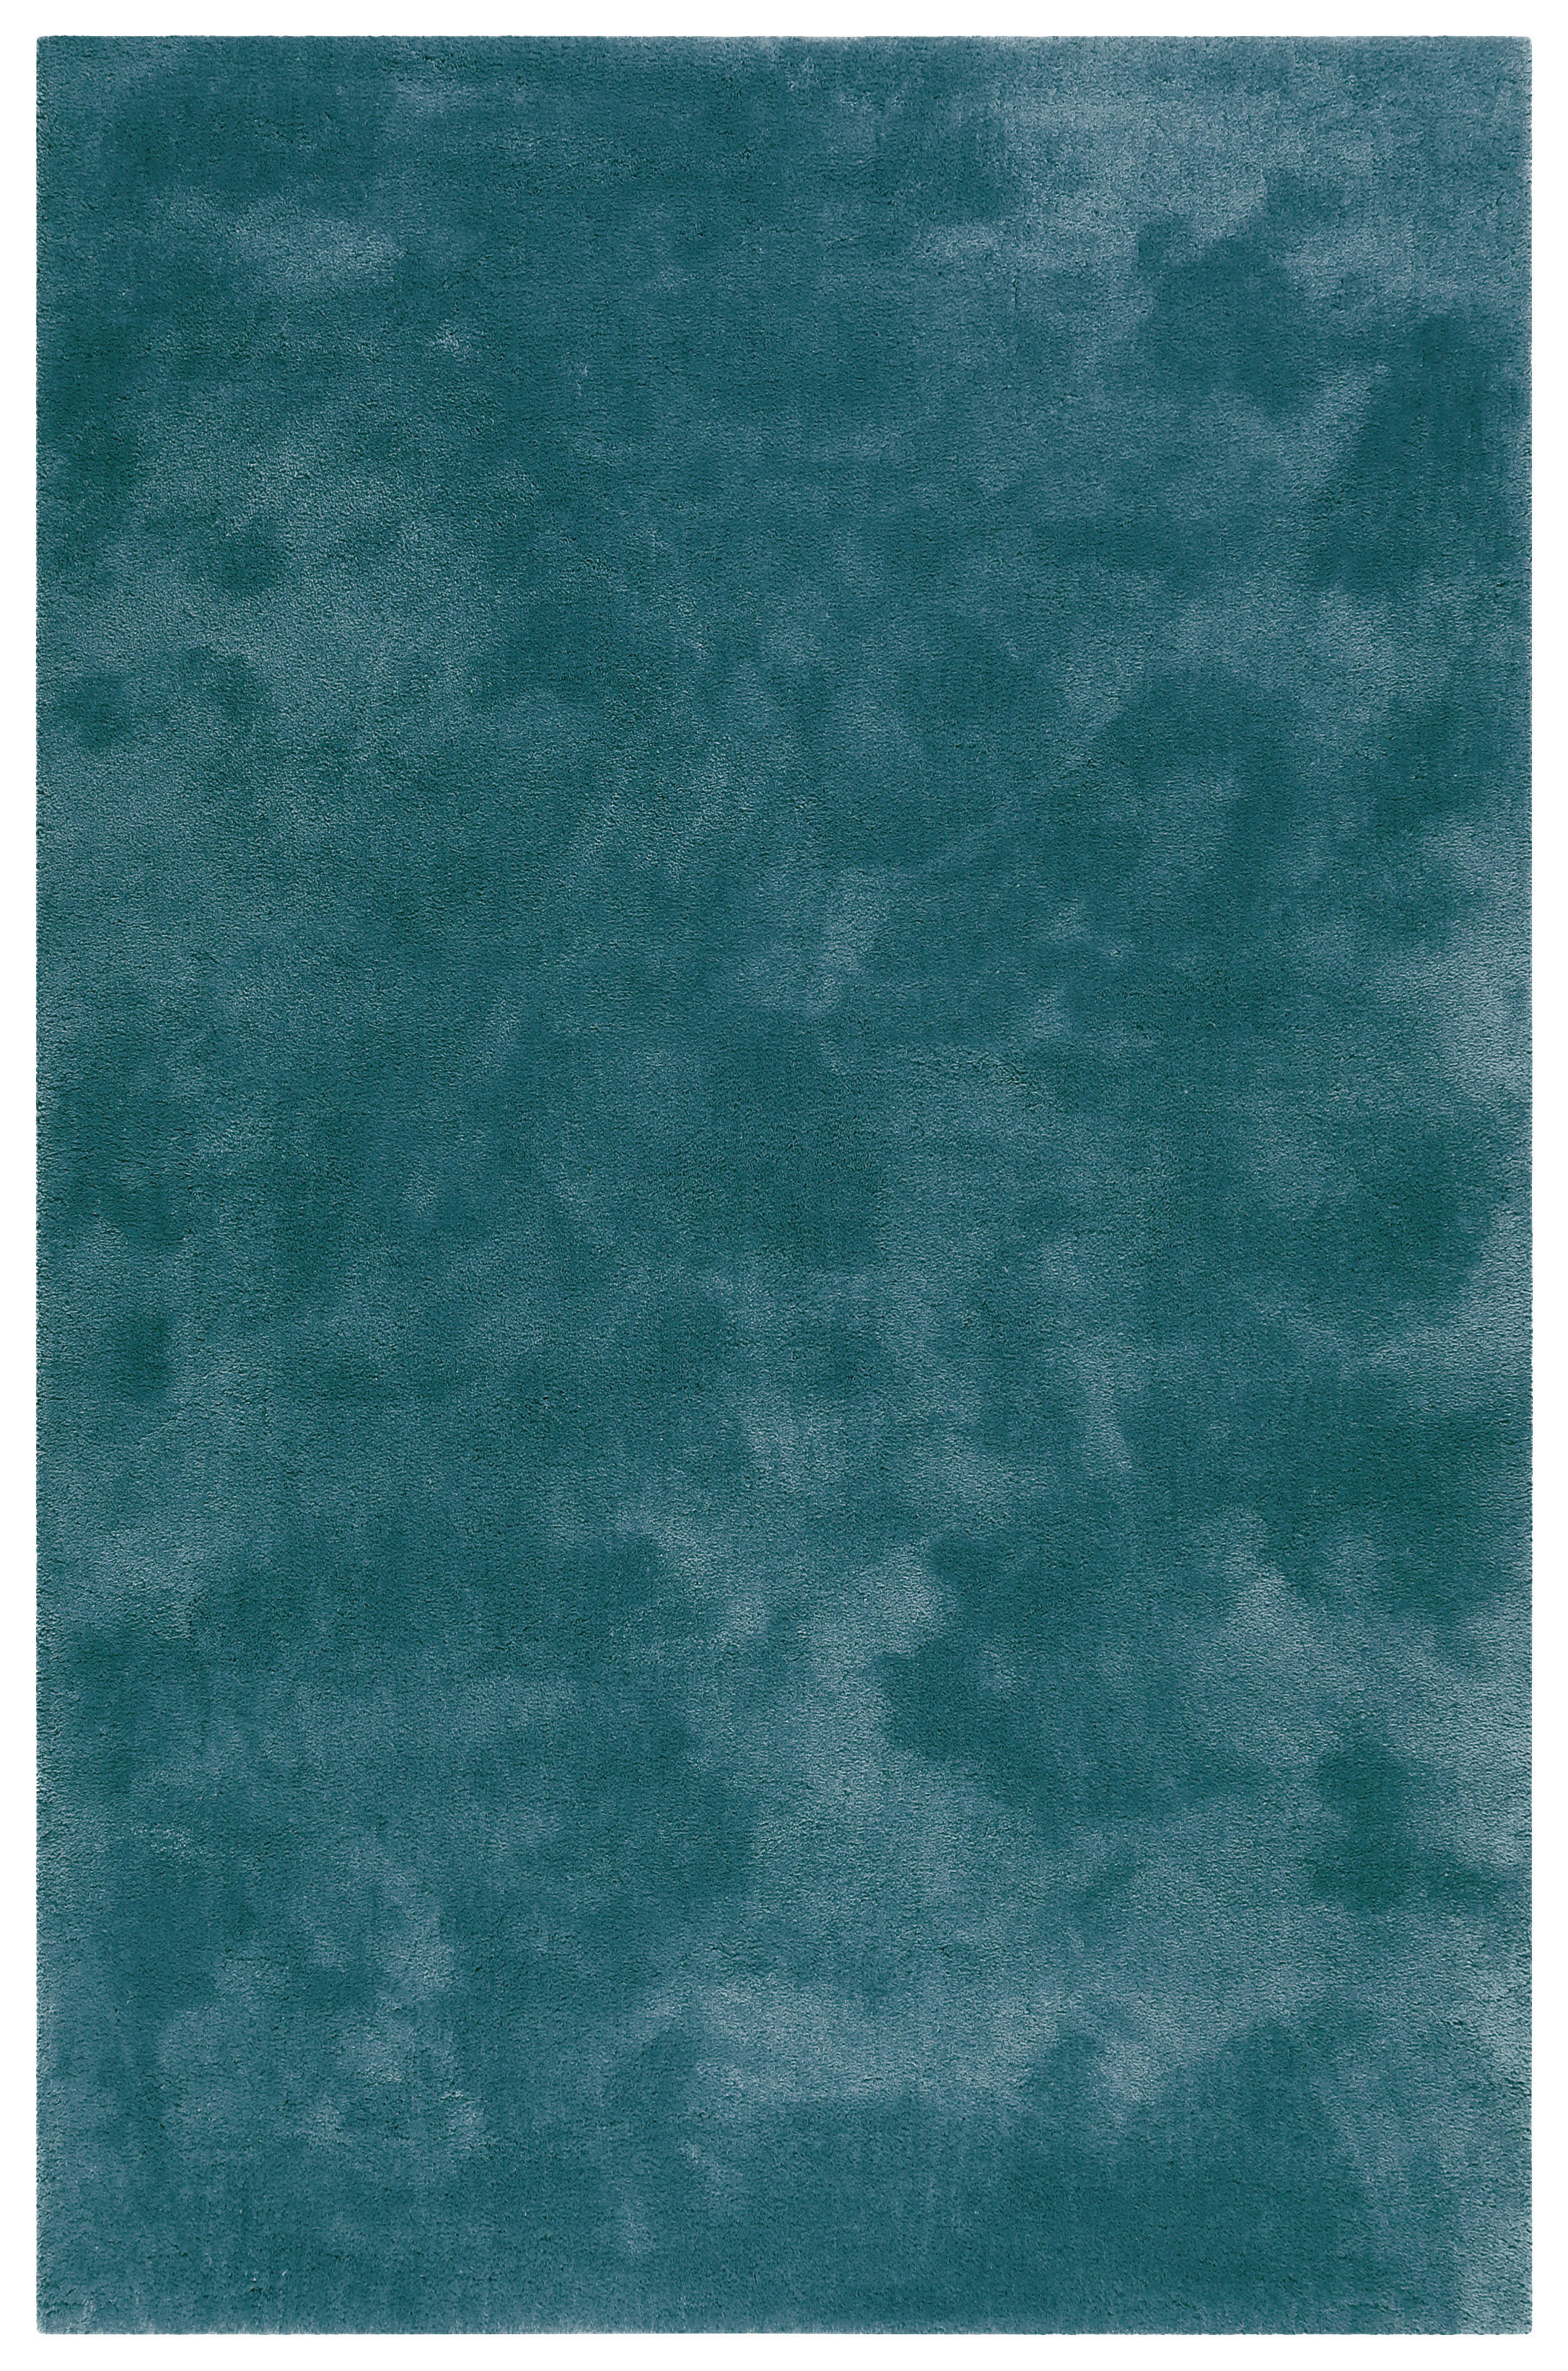 HOCHFLORTEPPICH  70/140 cm  getuftet  Smaragdgrün   - Smaragdgrün, Basics, Textil (70/140cm) - Esprit